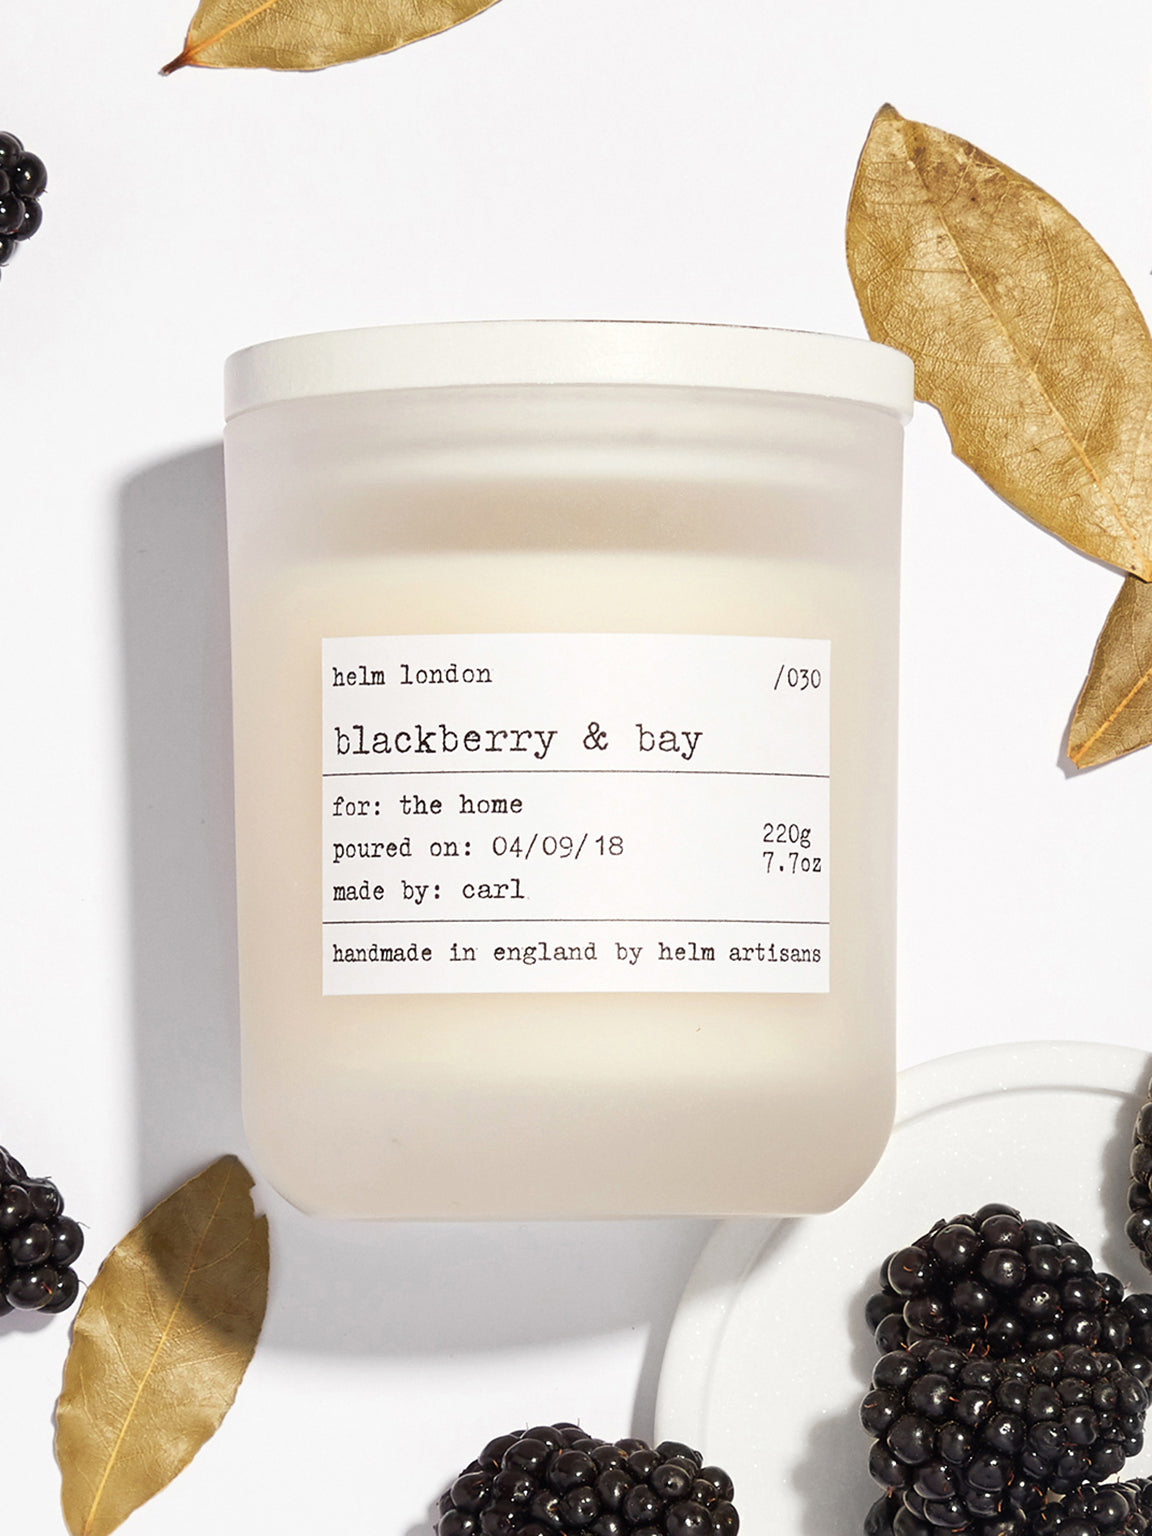 Helm London Blackberry & Bay Luxury Candle